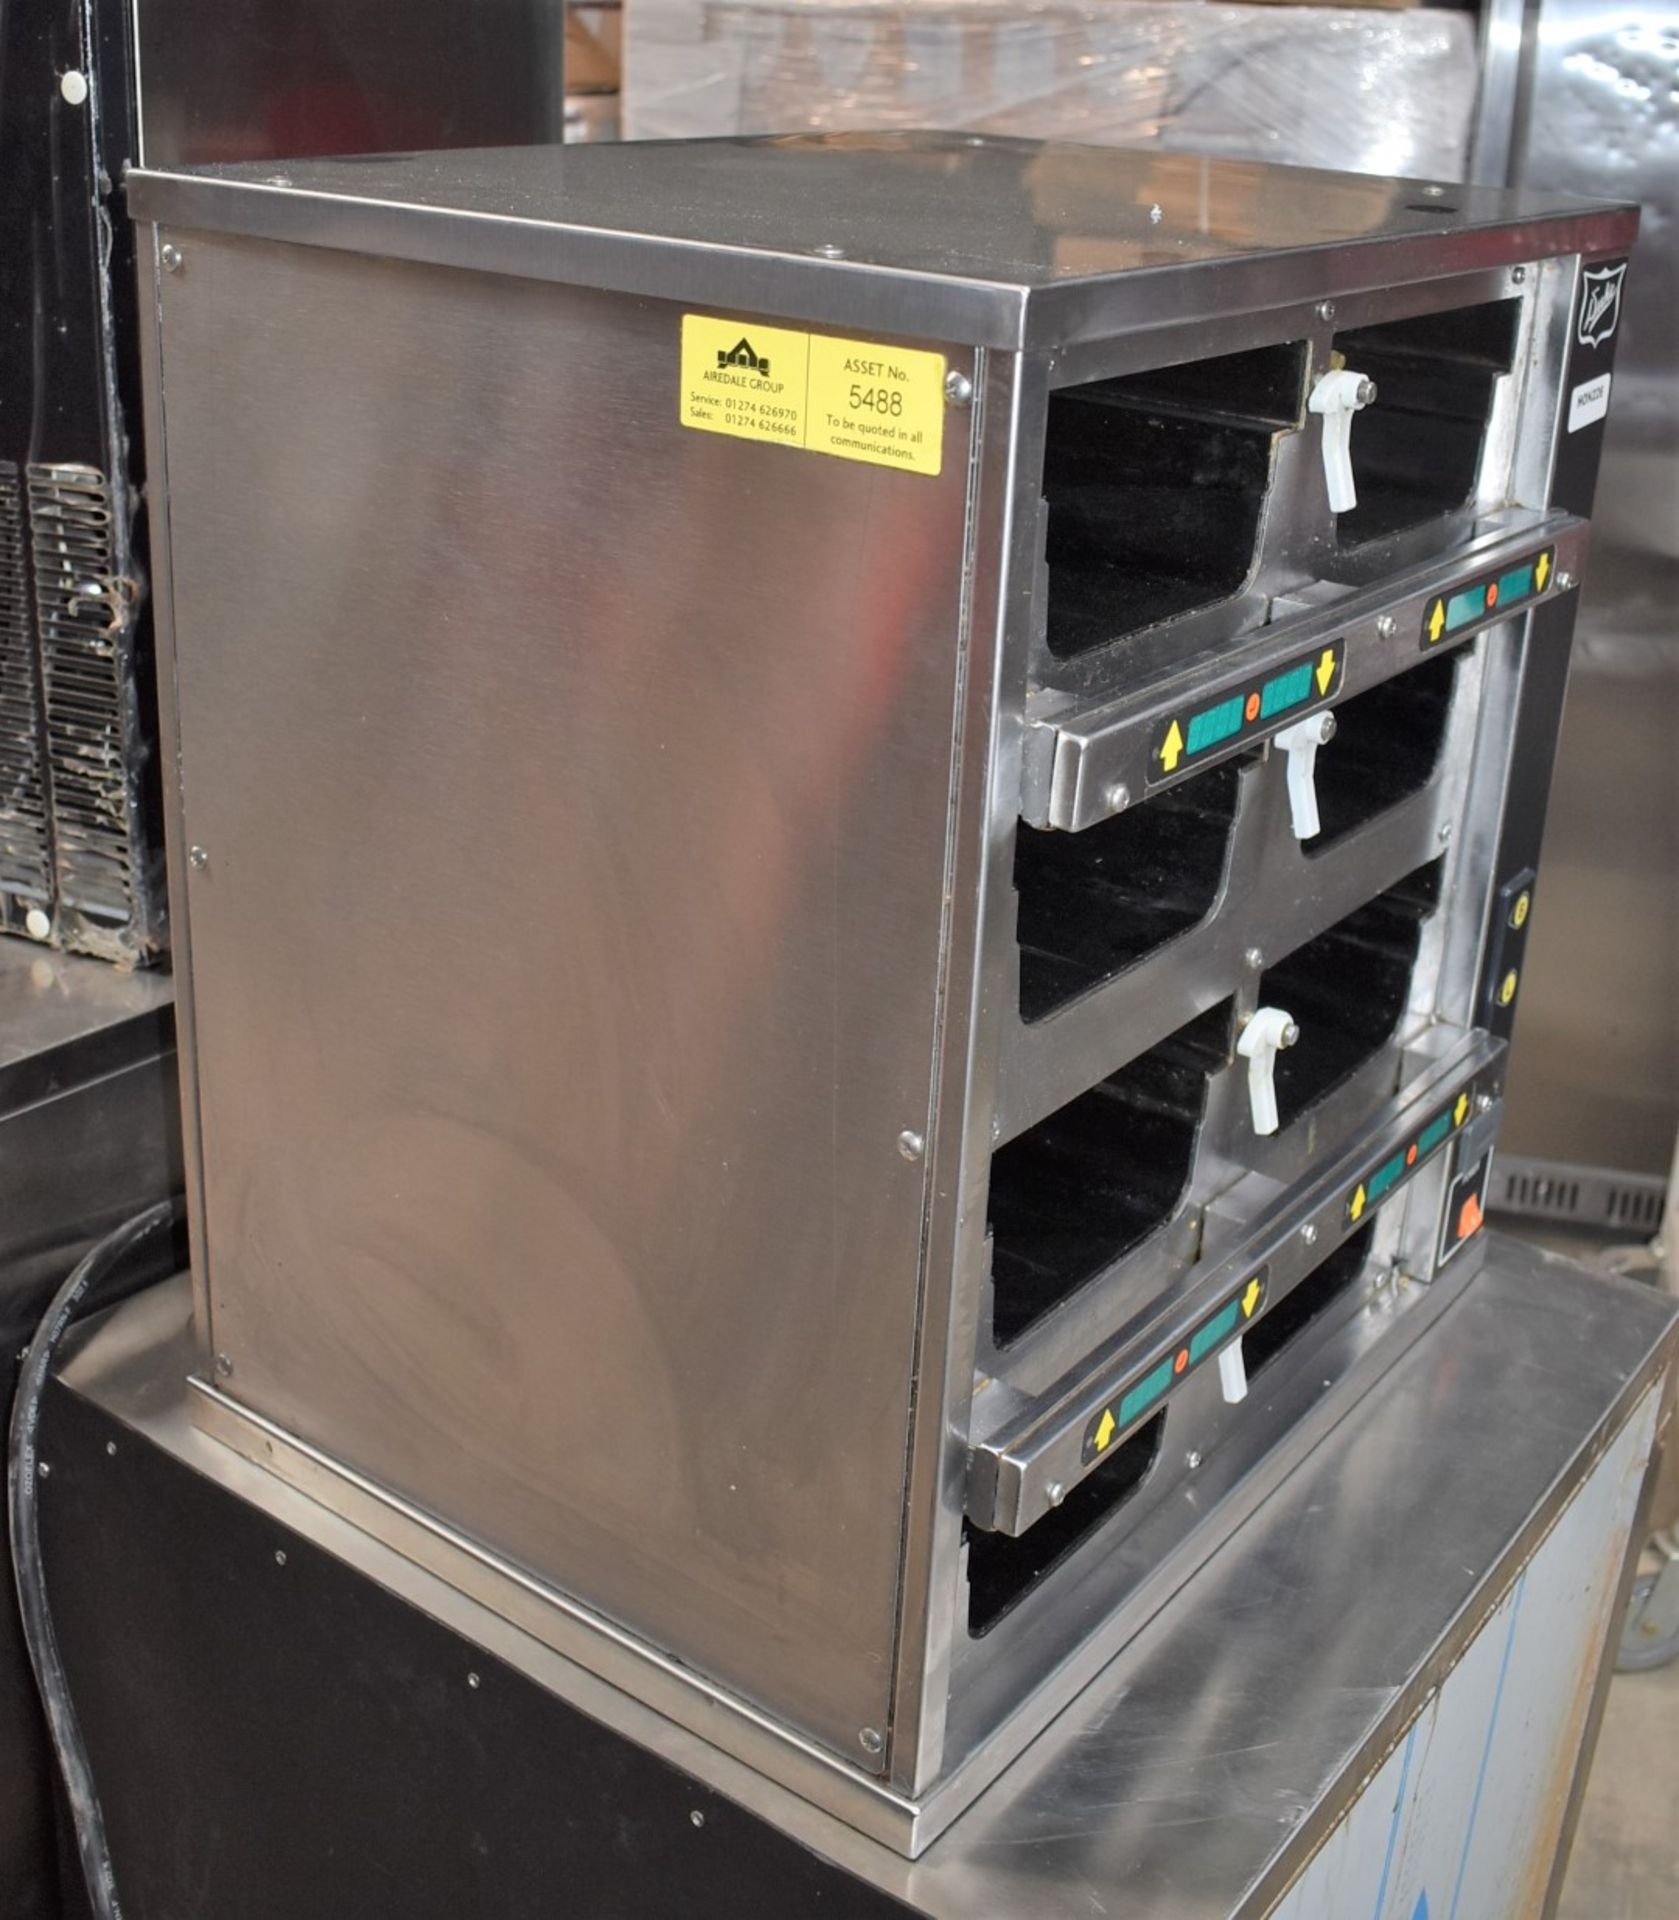 1 x Duke FWM Food Warming Holding Cabinet With HeatSinnk Technology - Model FWM3-42PR6-230 - Image 11 of 11